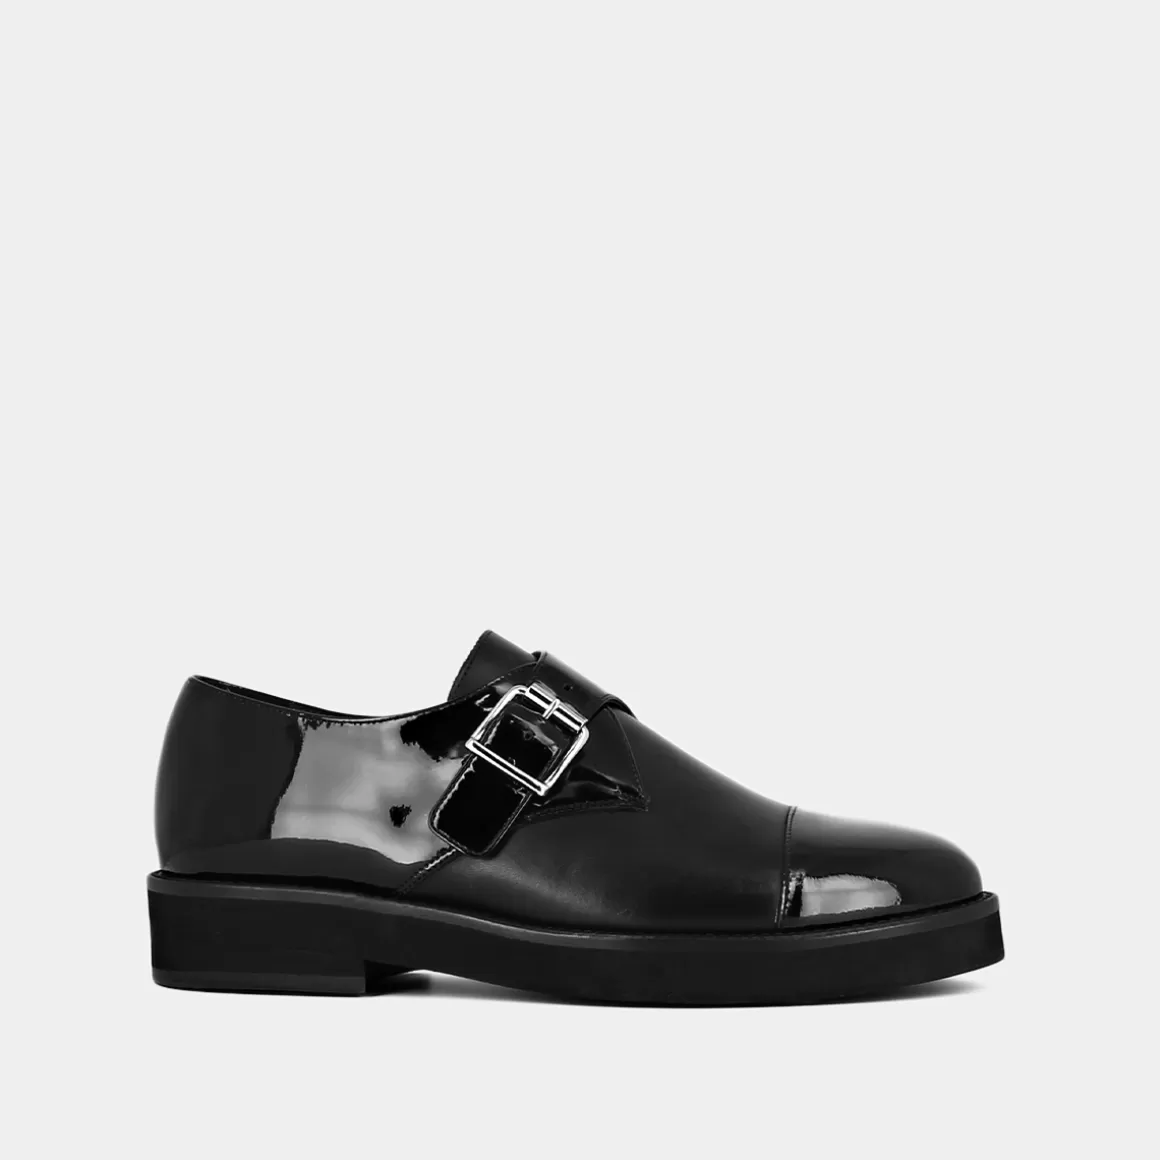 Flat heels, round toes and buckles<Jonak Best Sale